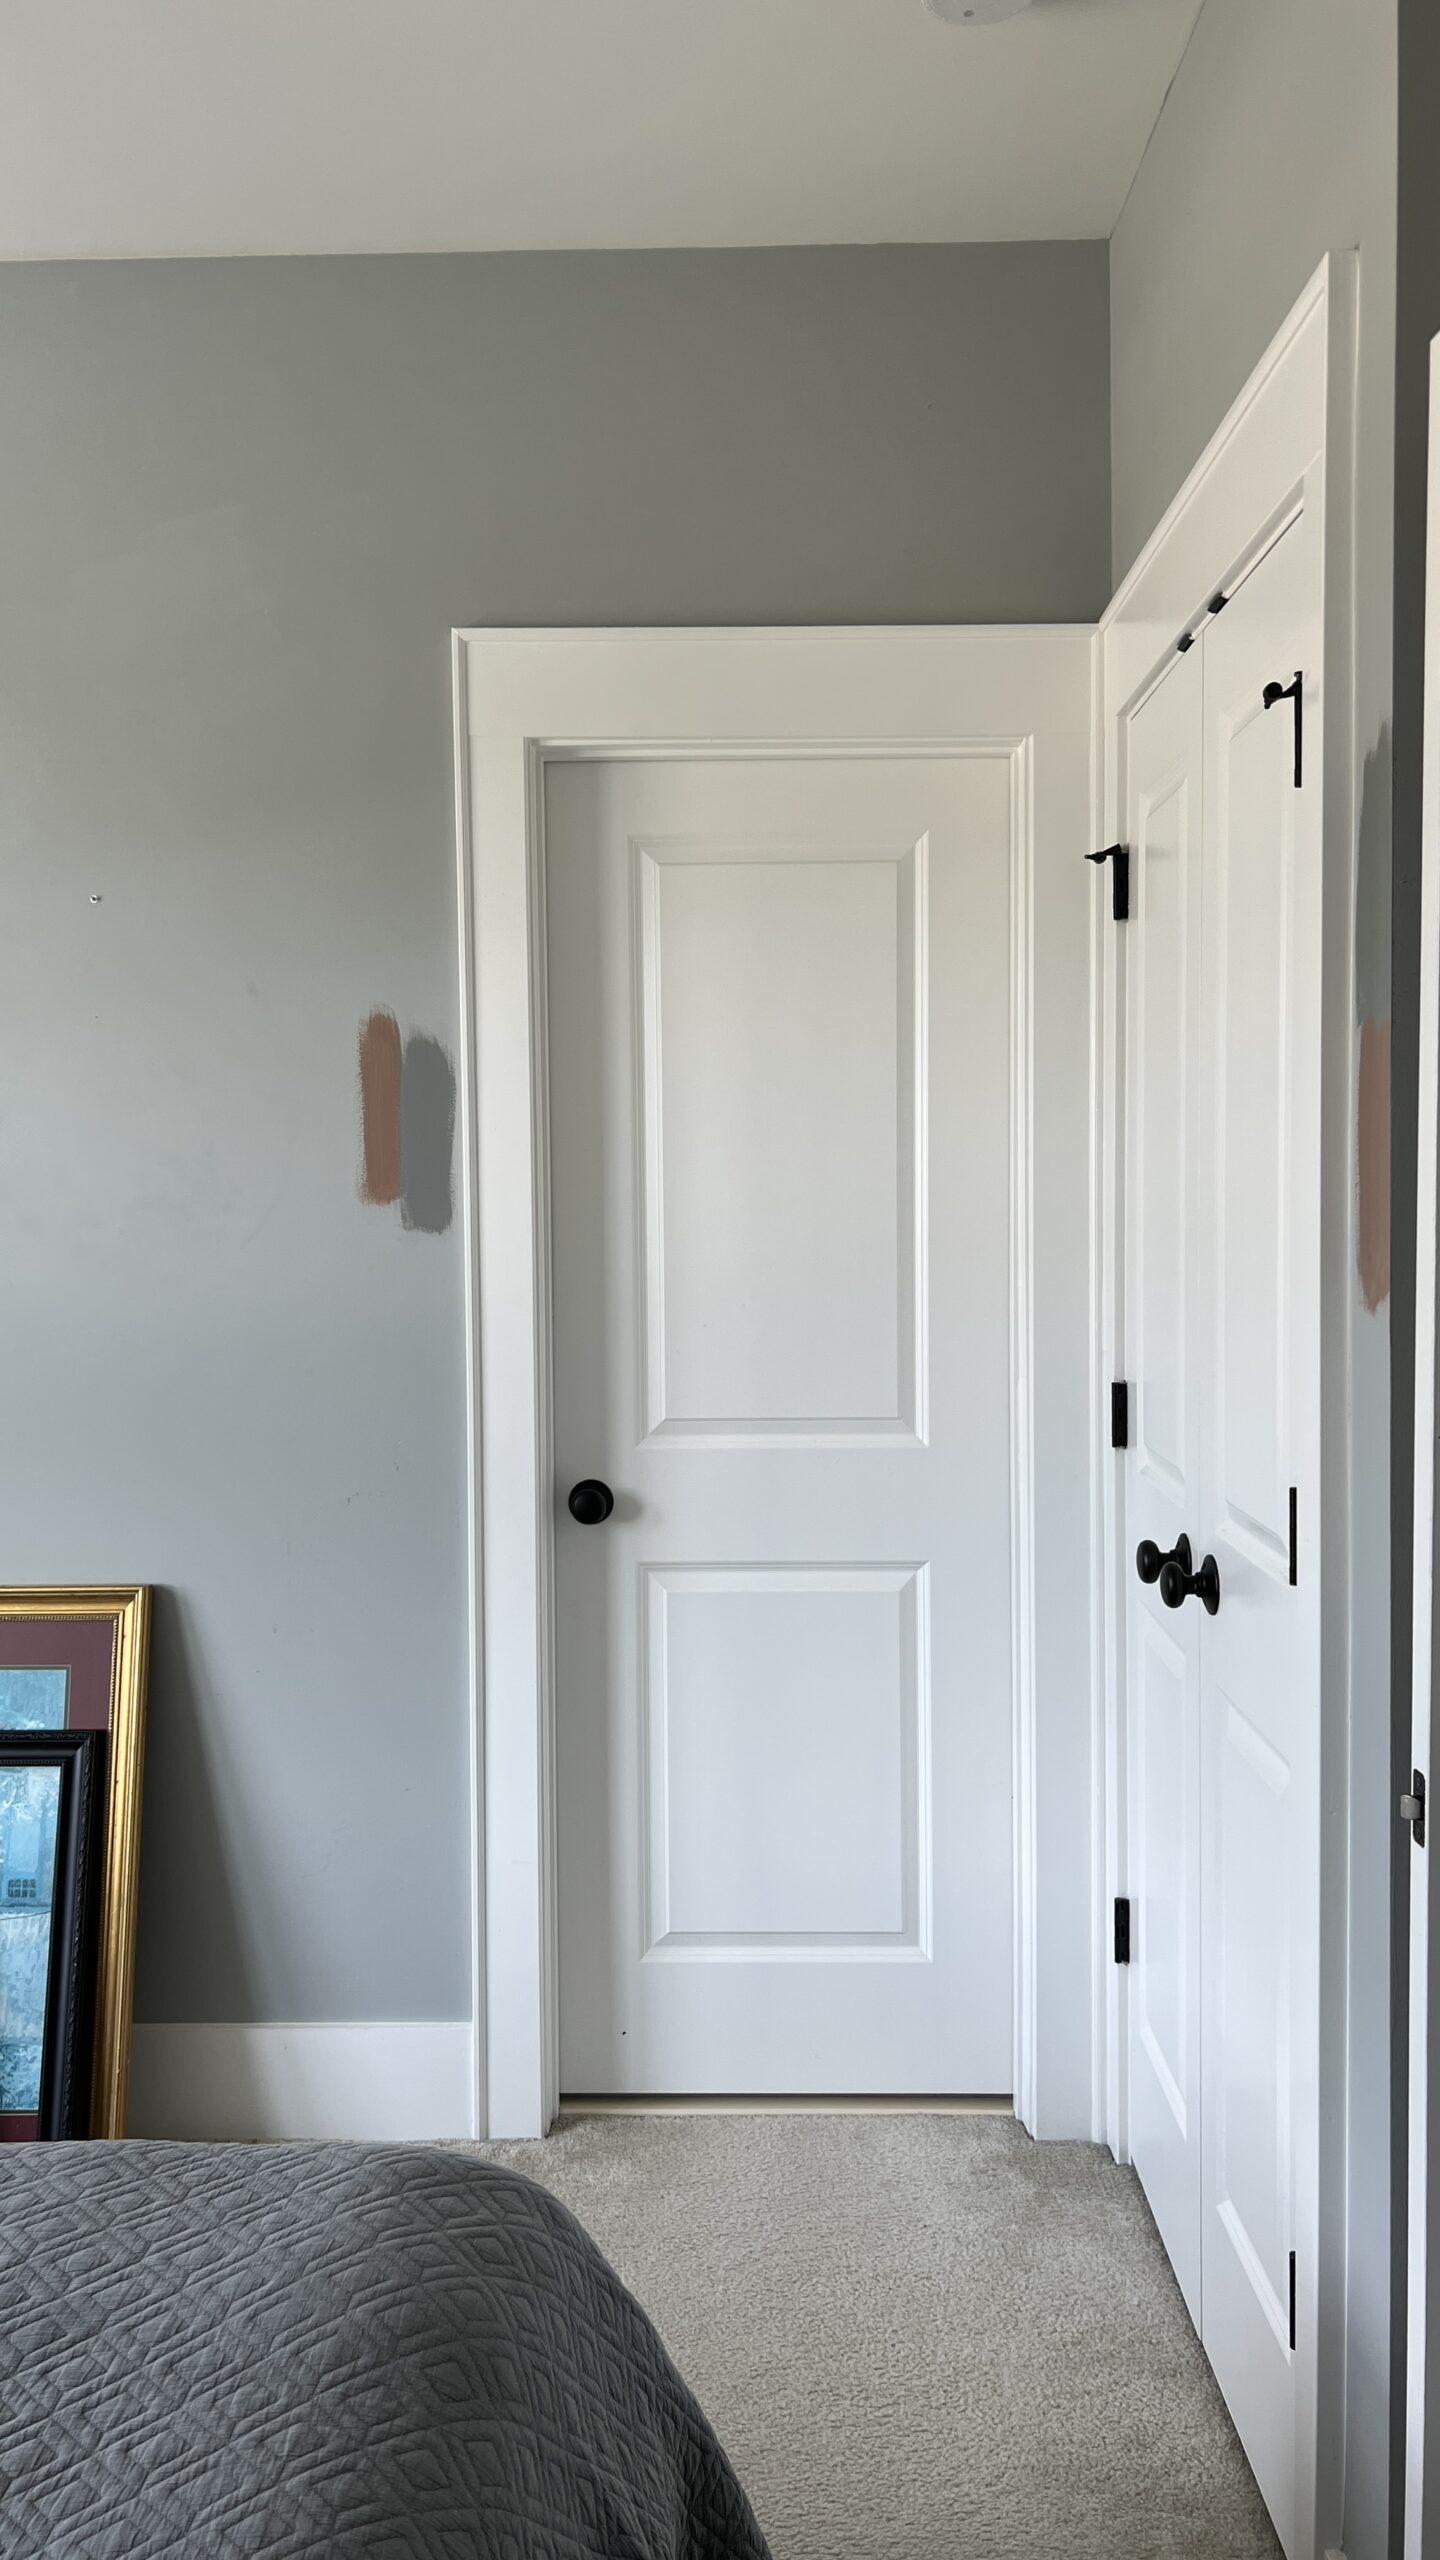 a view of a door and closet doors in a guest bedroom